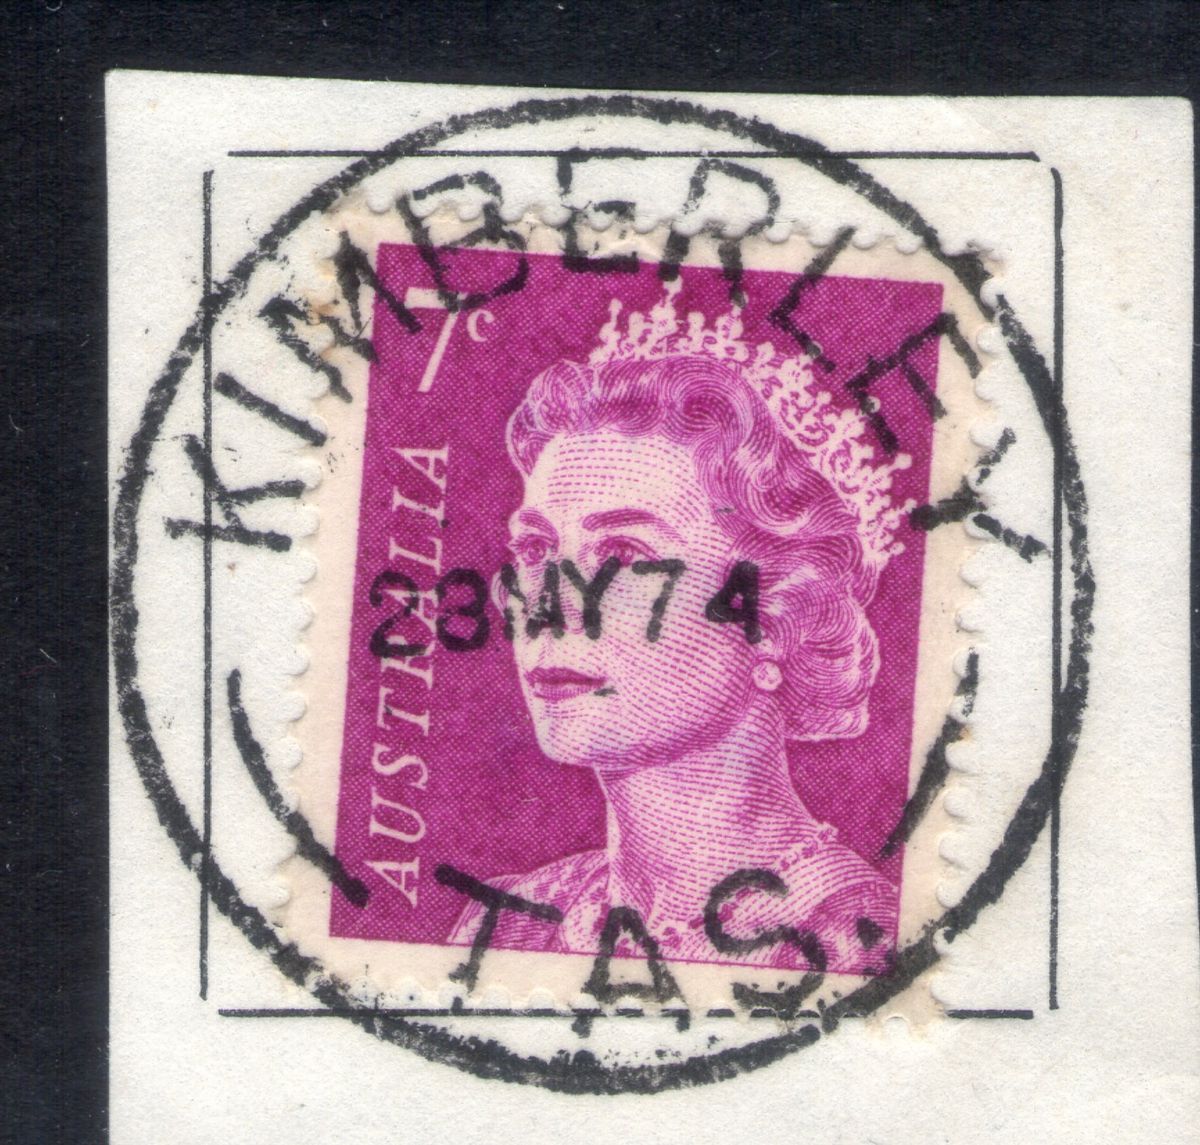 7c QEII Stamp Complete Circular Postmark of Kimberley 28 May 74